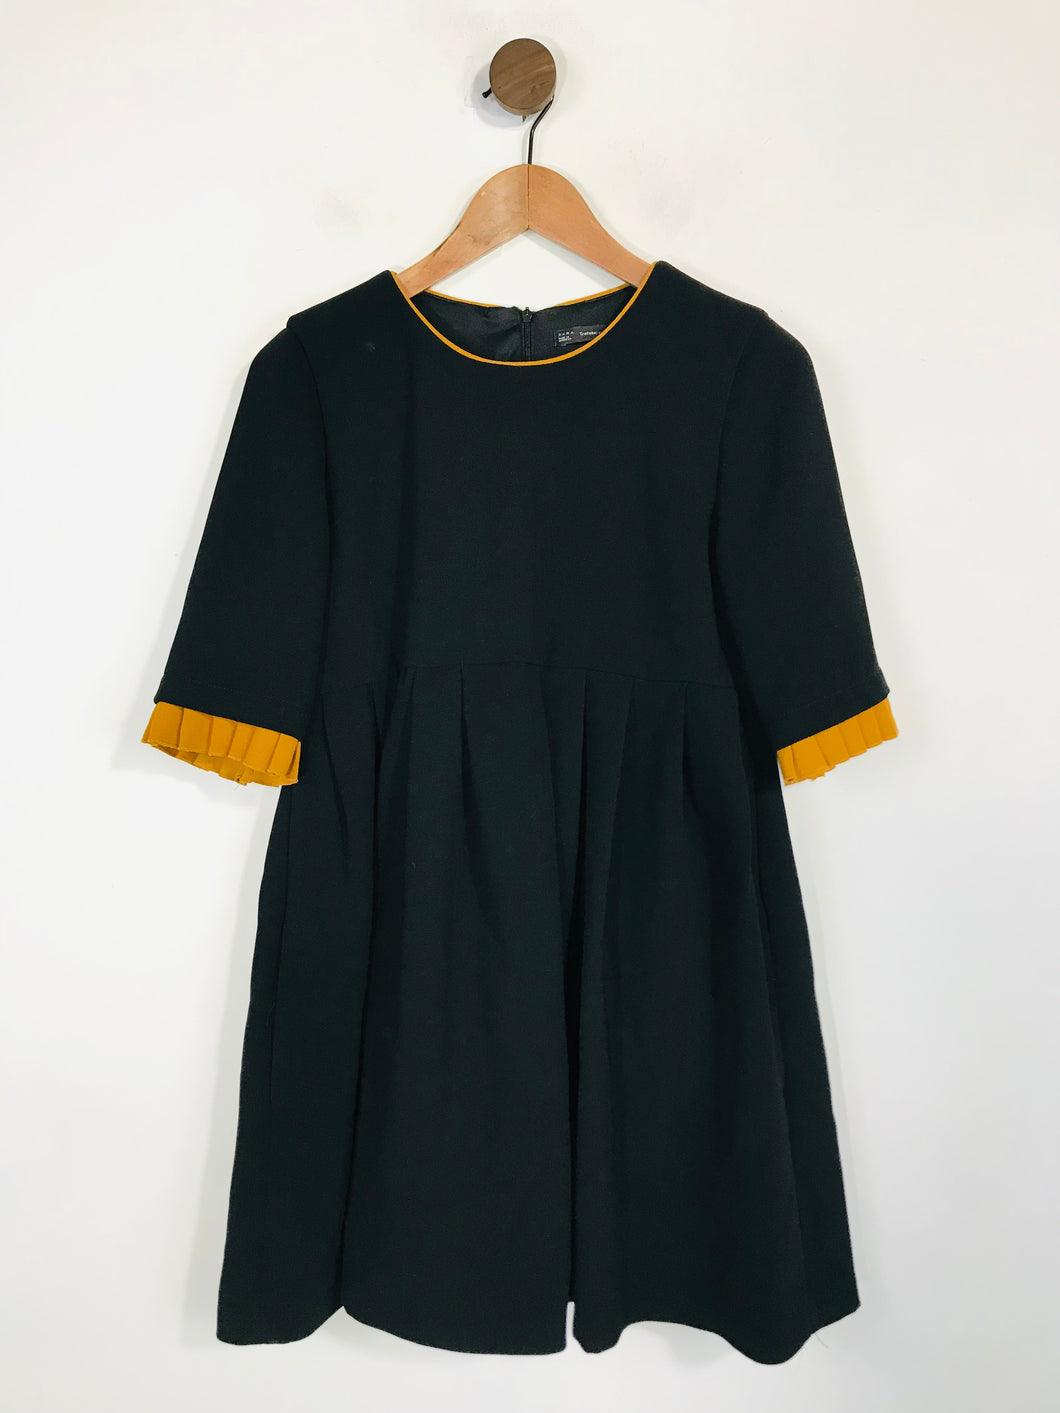 Zara Women's Pleated A-Line Dress | M UK10-12 | Black